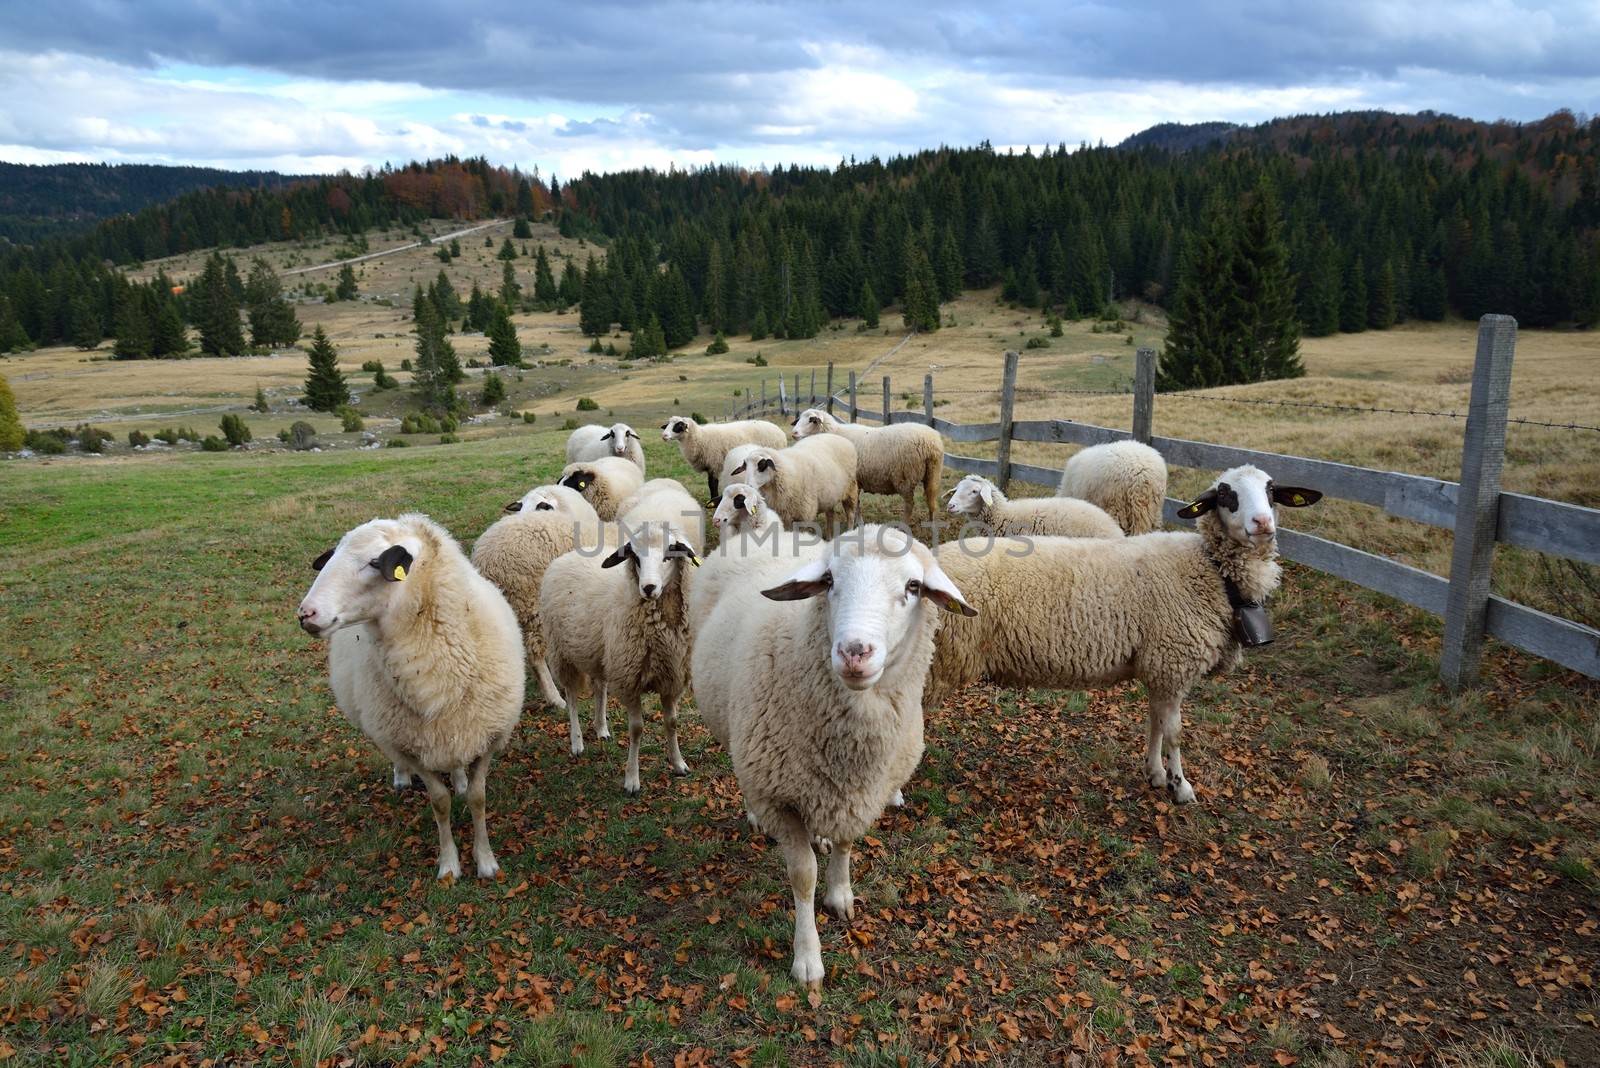 Group of Sheep by zagart36